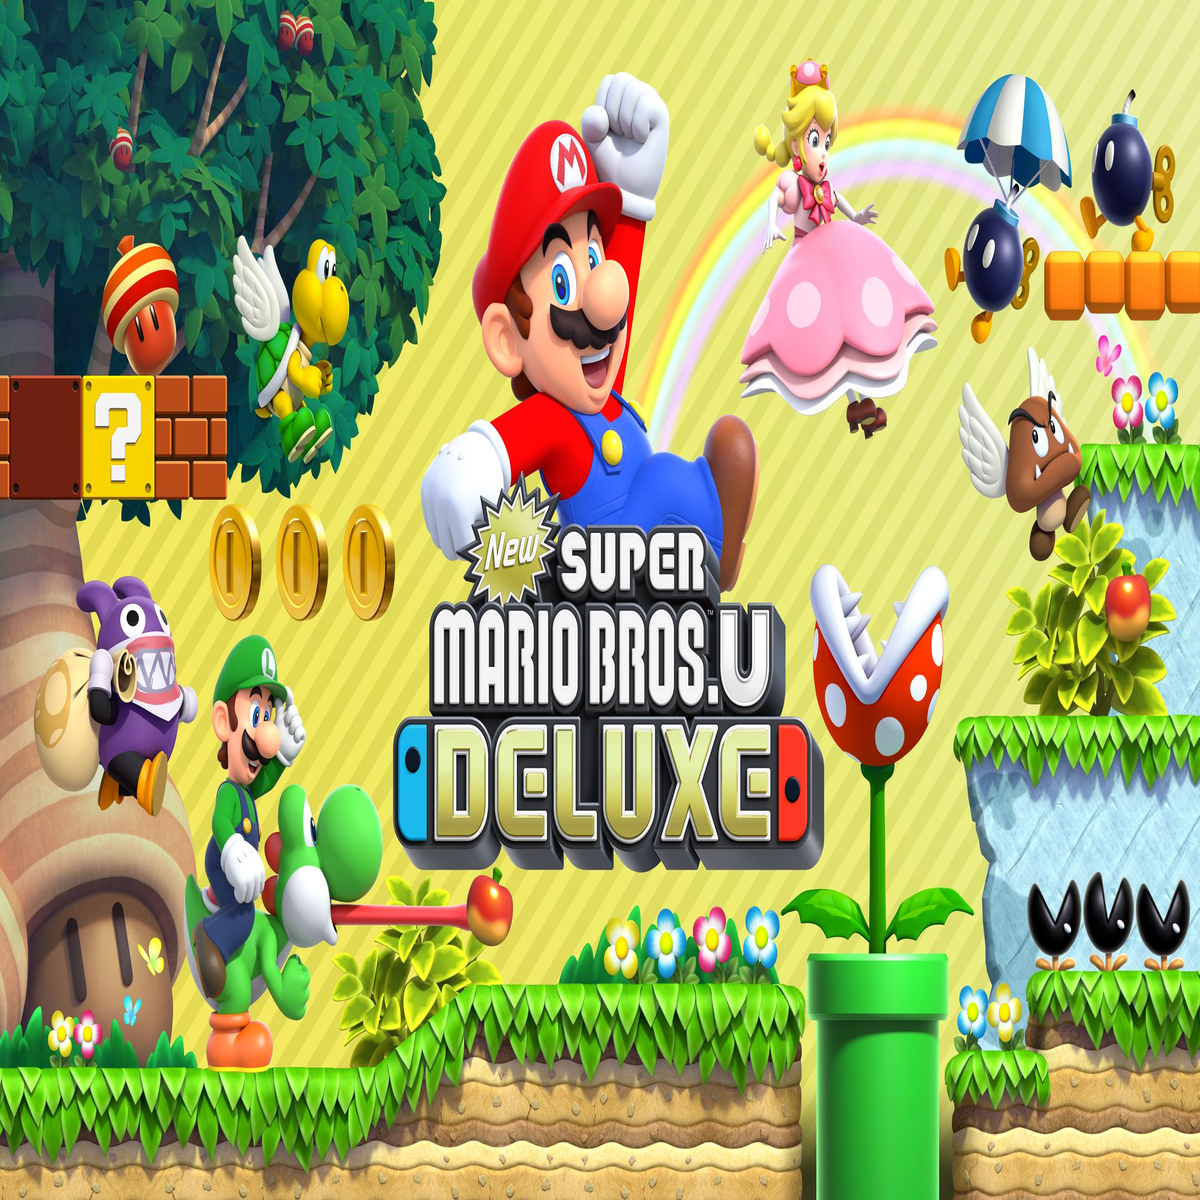 New Super Mario Bros U Deluxe, Nintendo, Nintendo Switch, U.S.